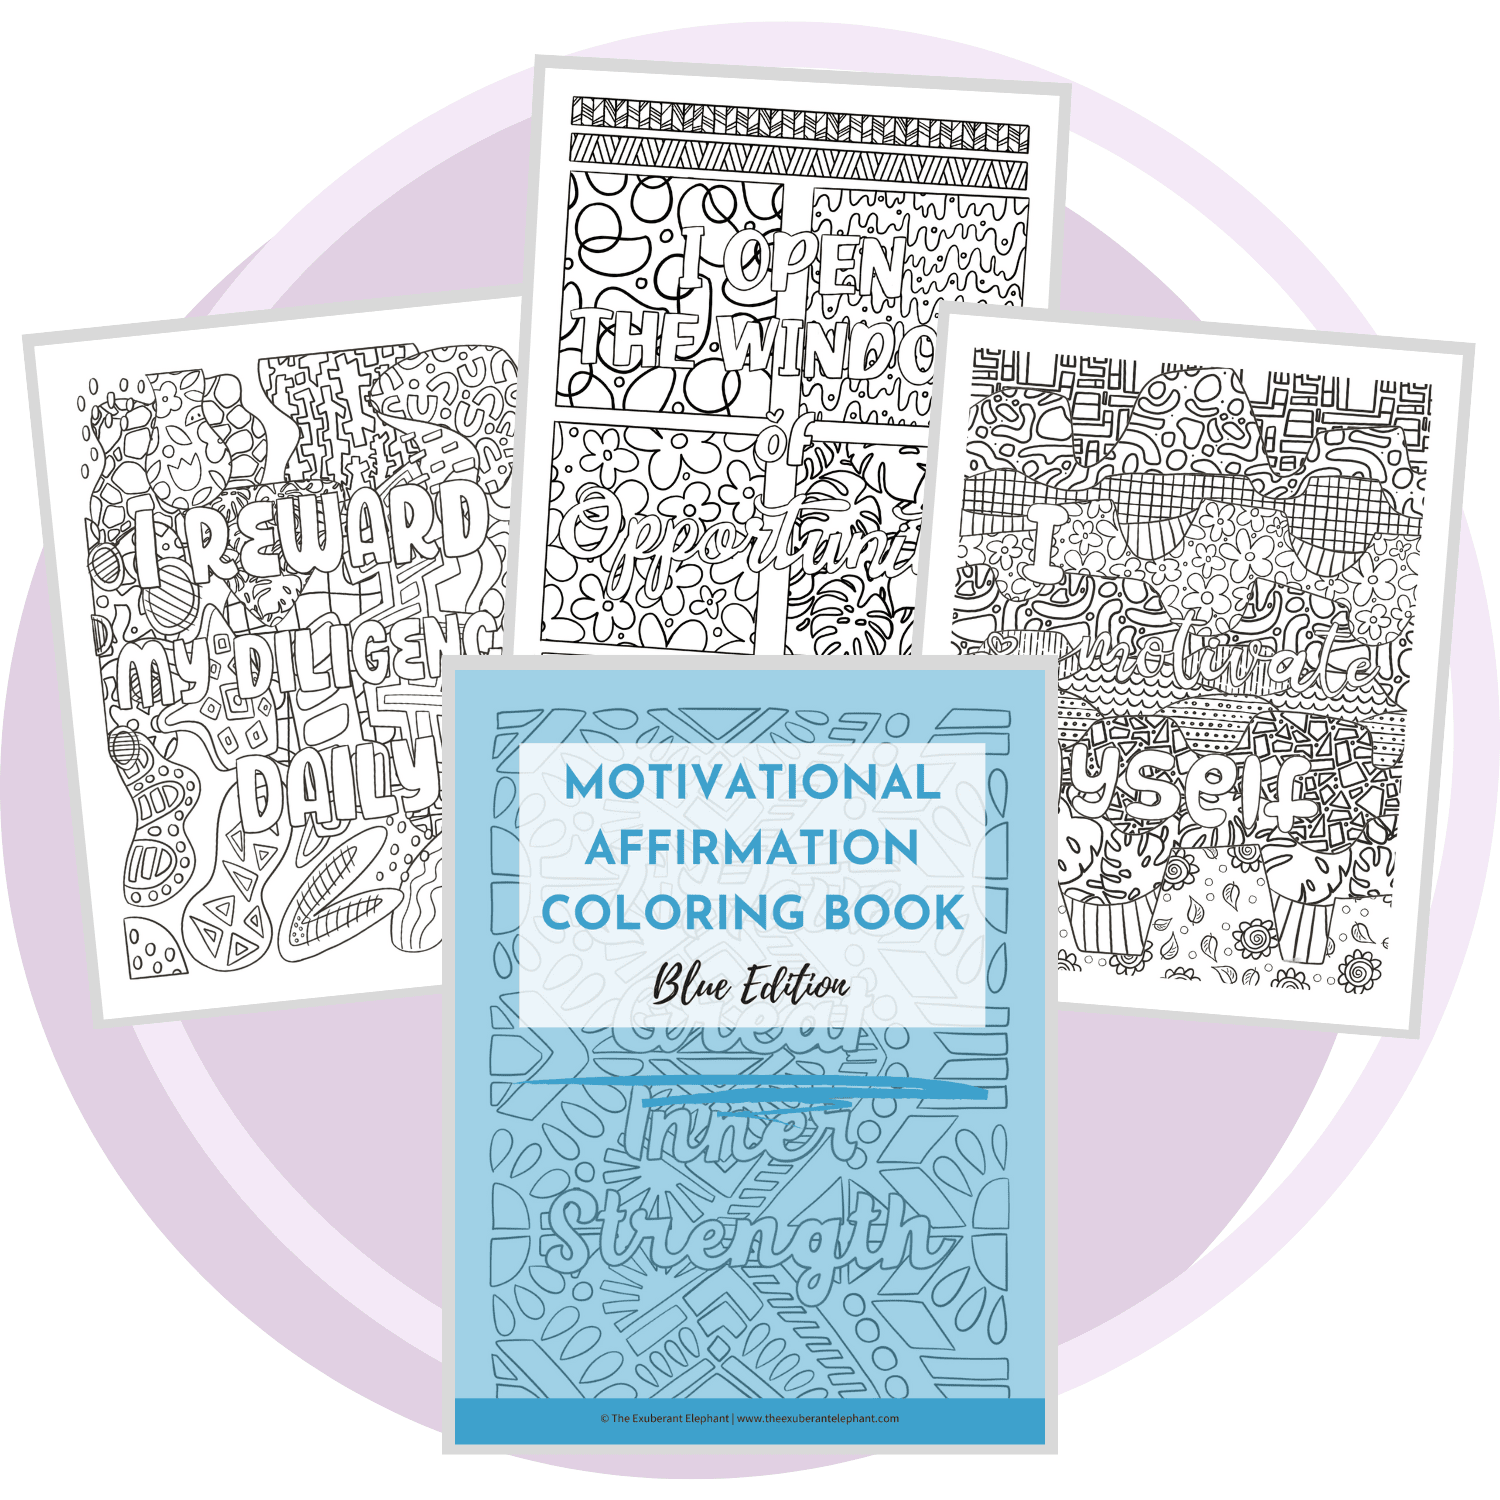 Motivational Affirmation Coloring Book - Blue Edition